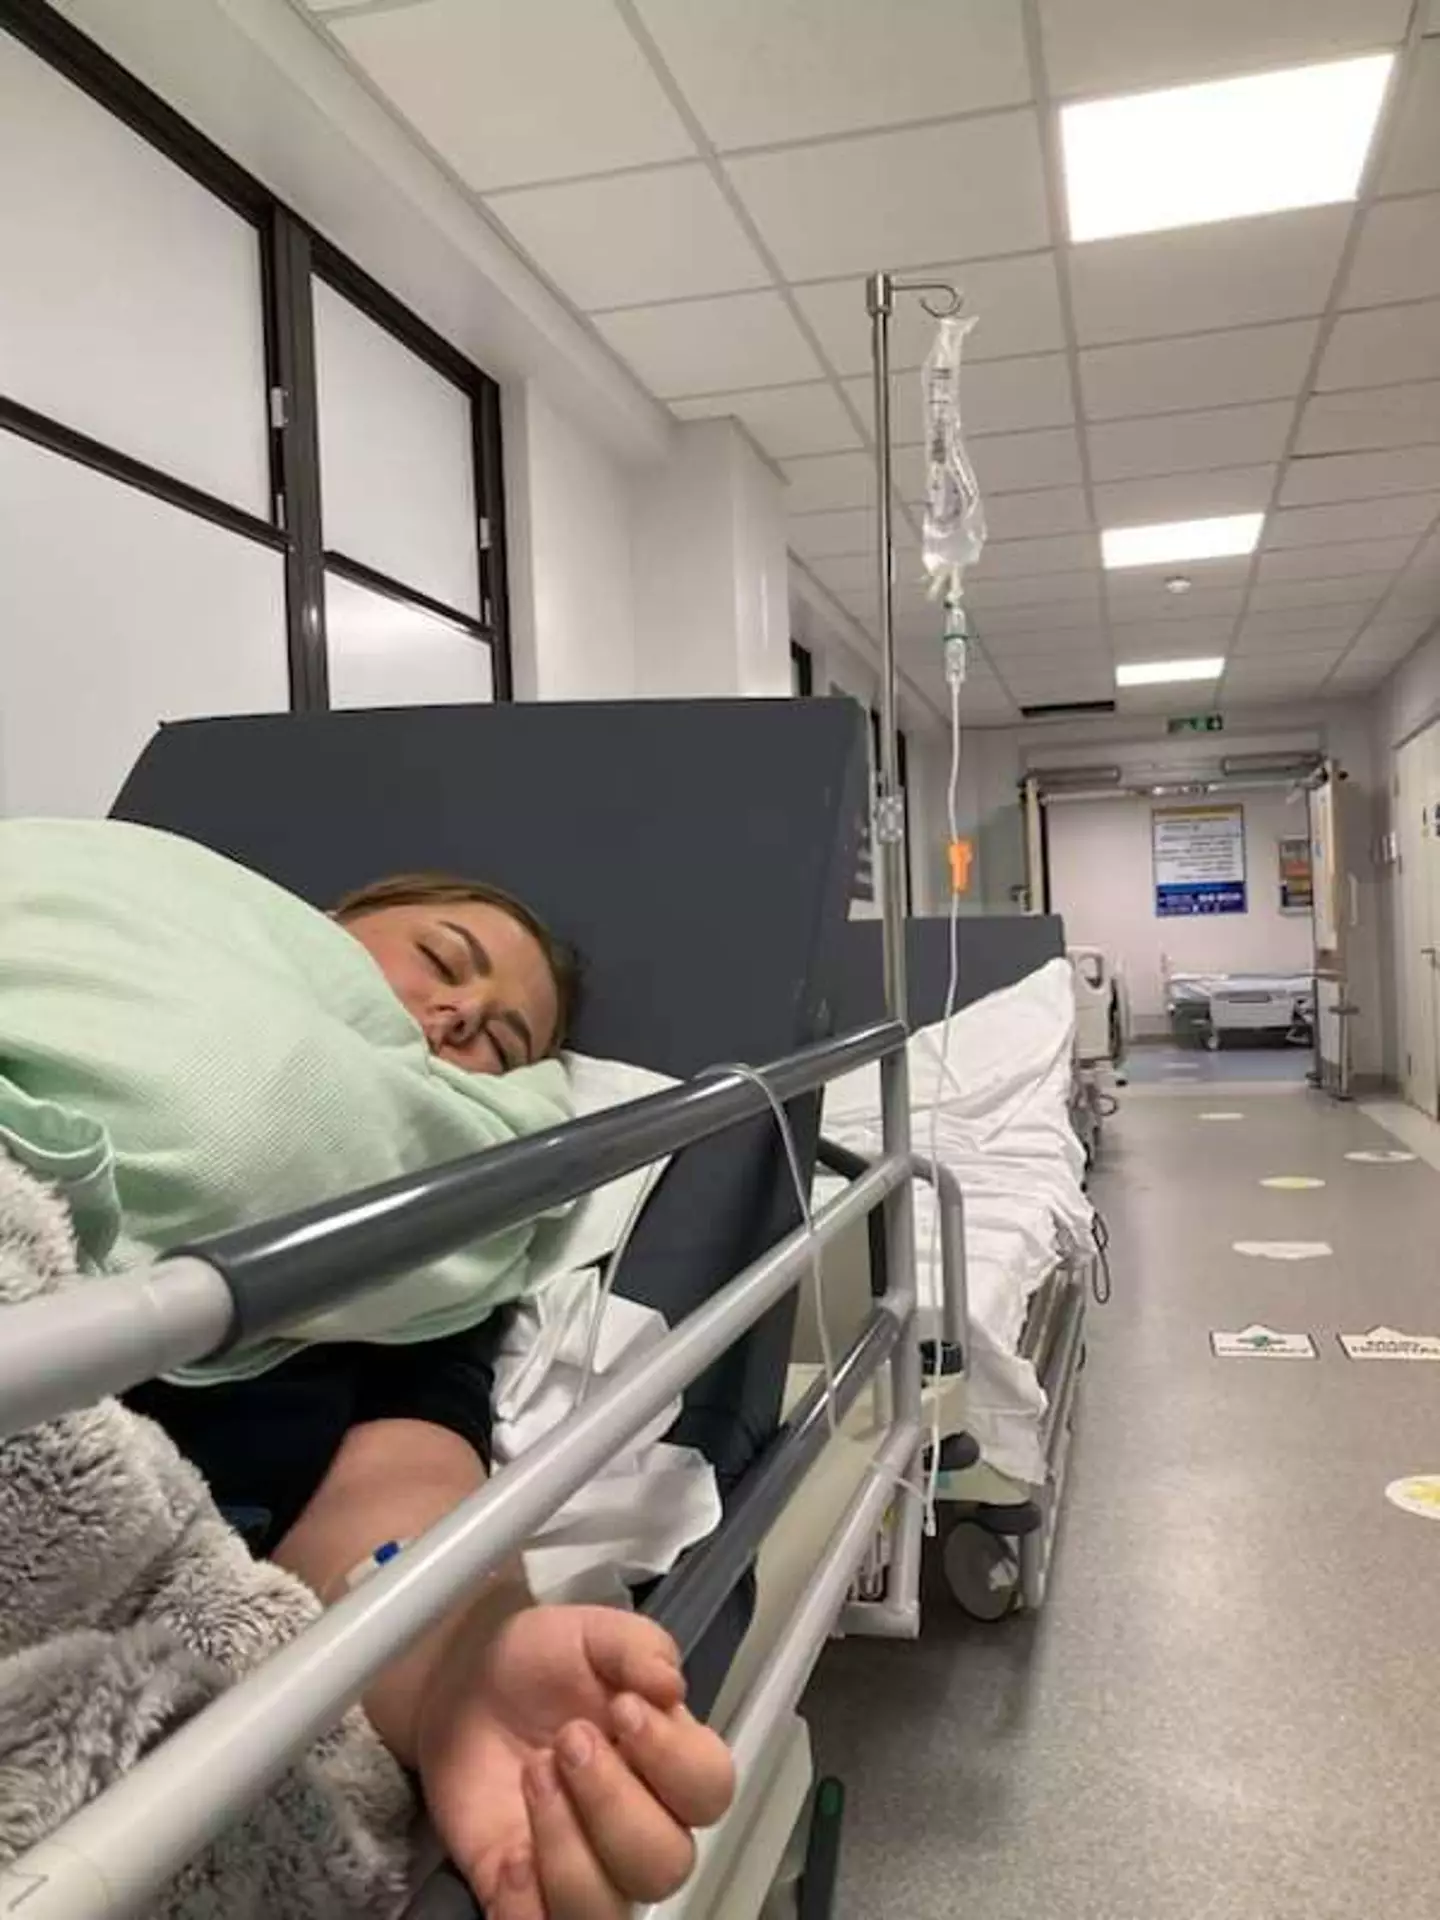 Kacie was treated in hospital.